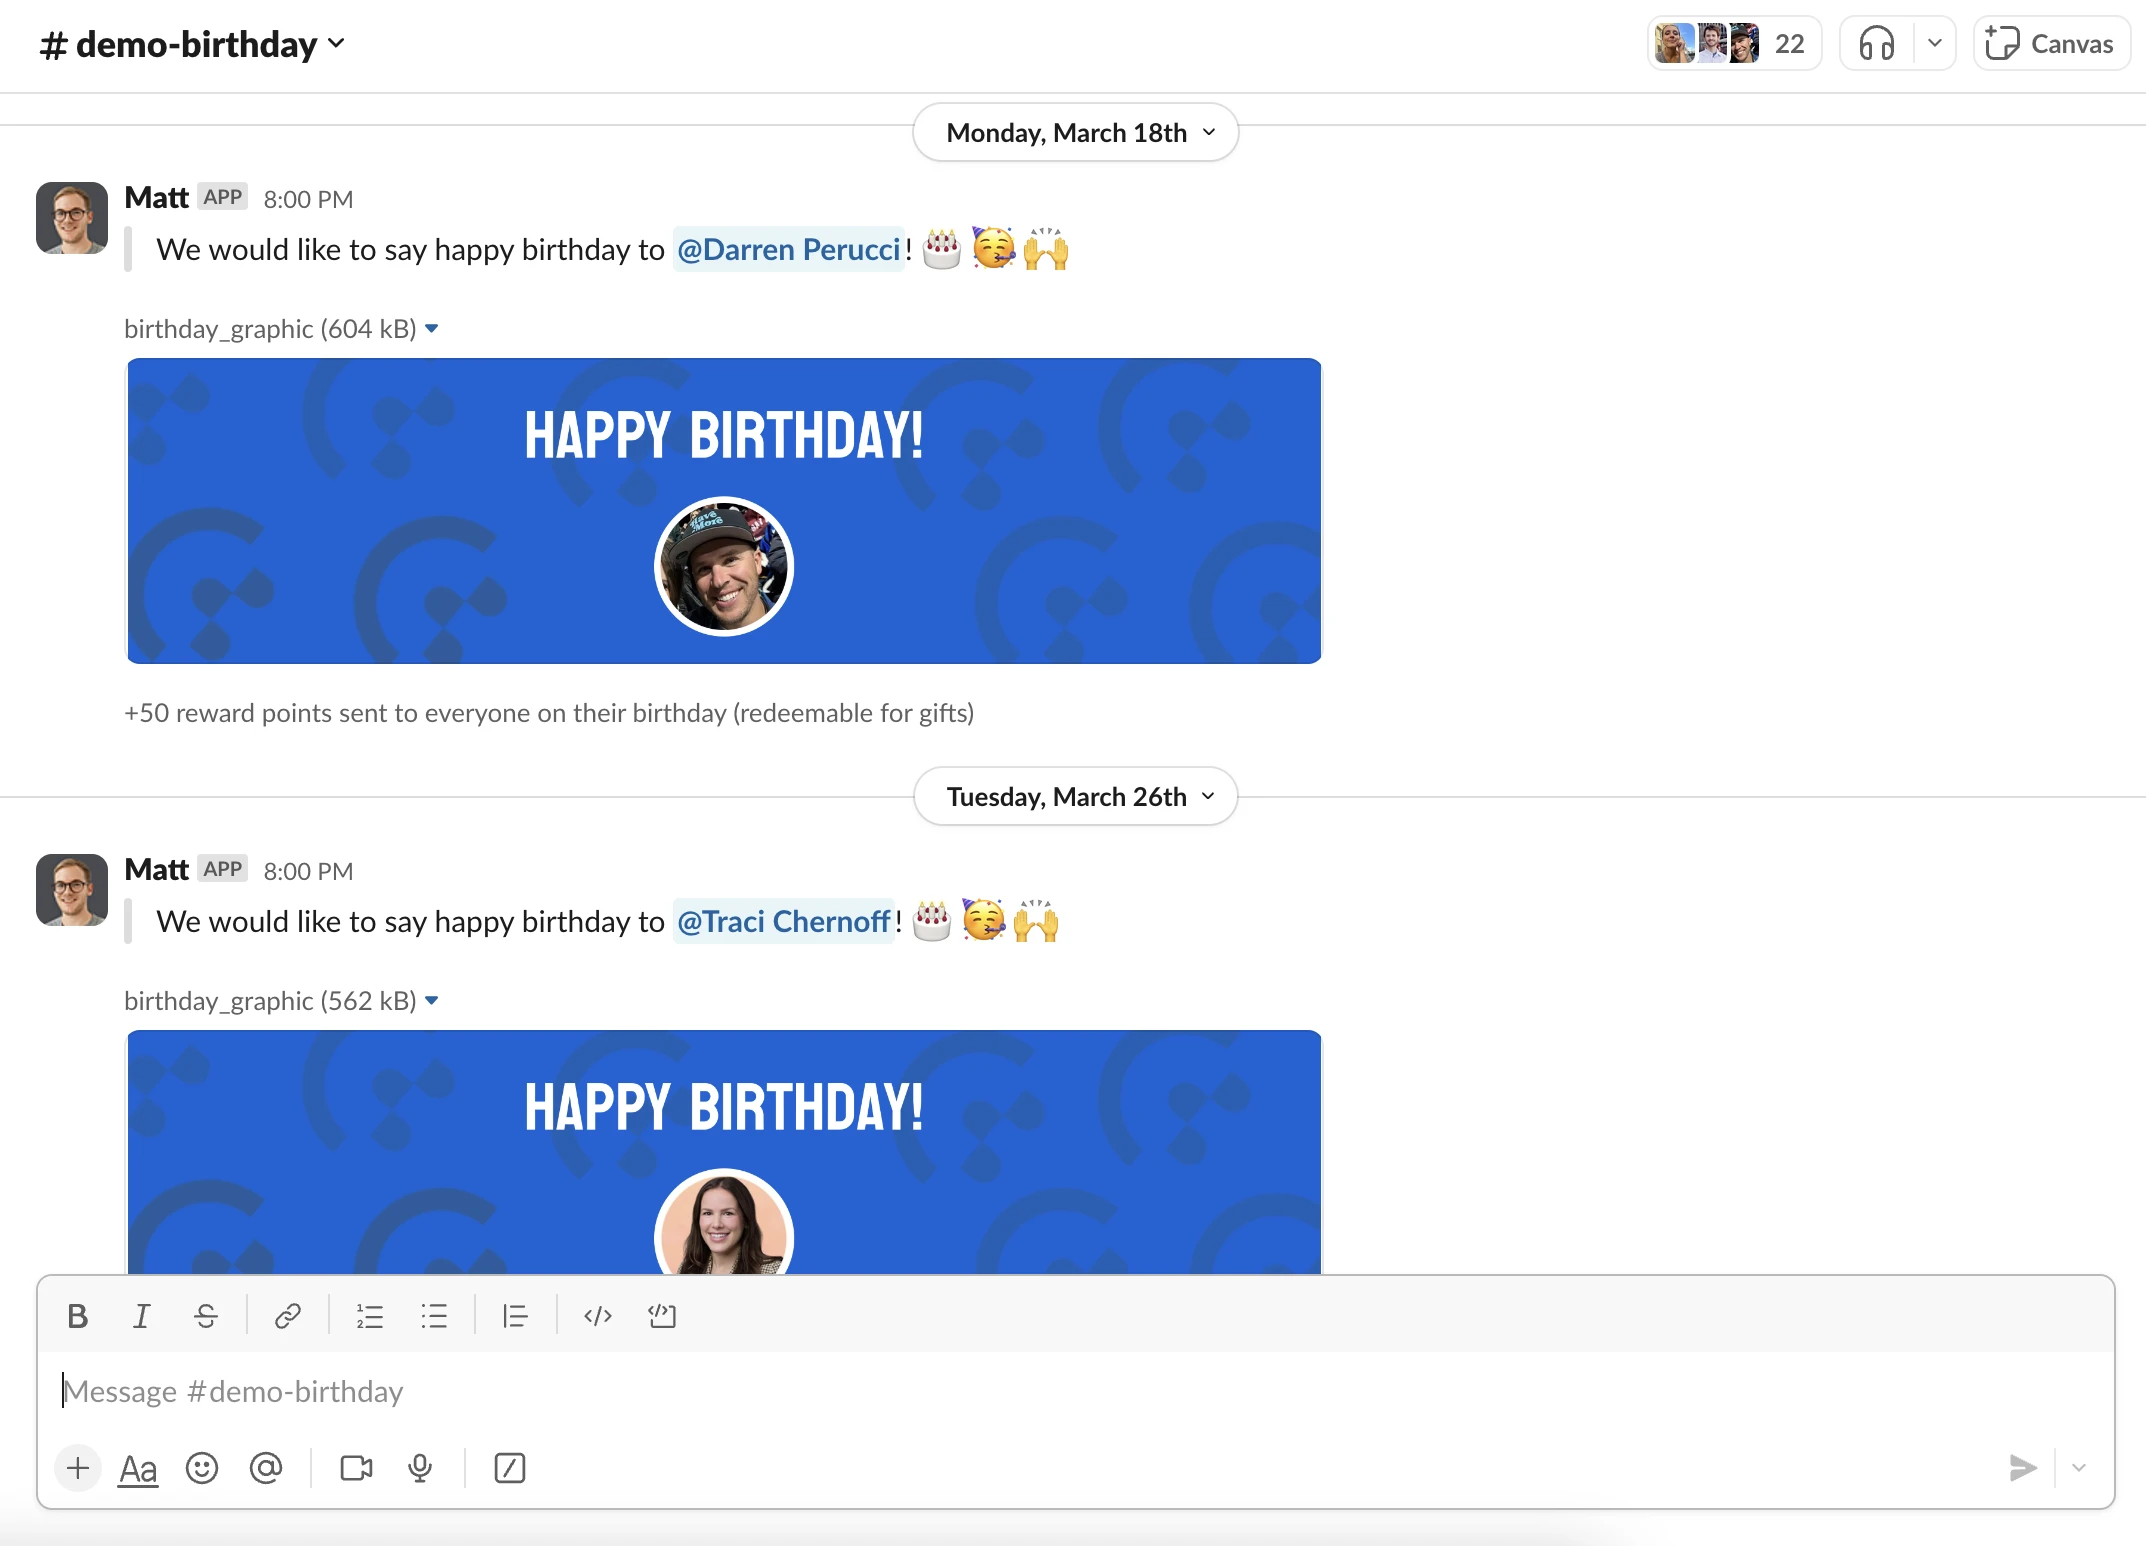 virtual birthday celebrations in Slack